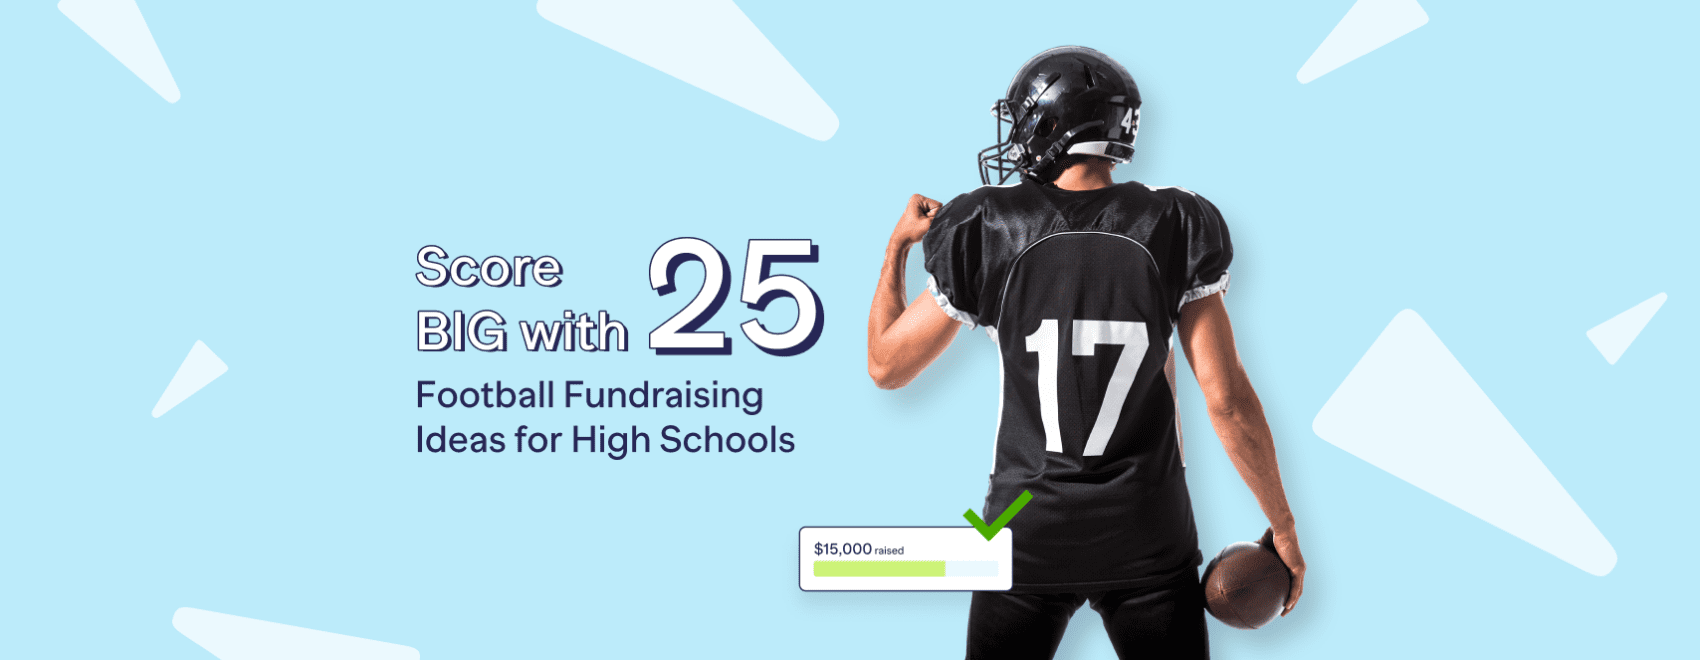 Football fundraising ideas for high schools